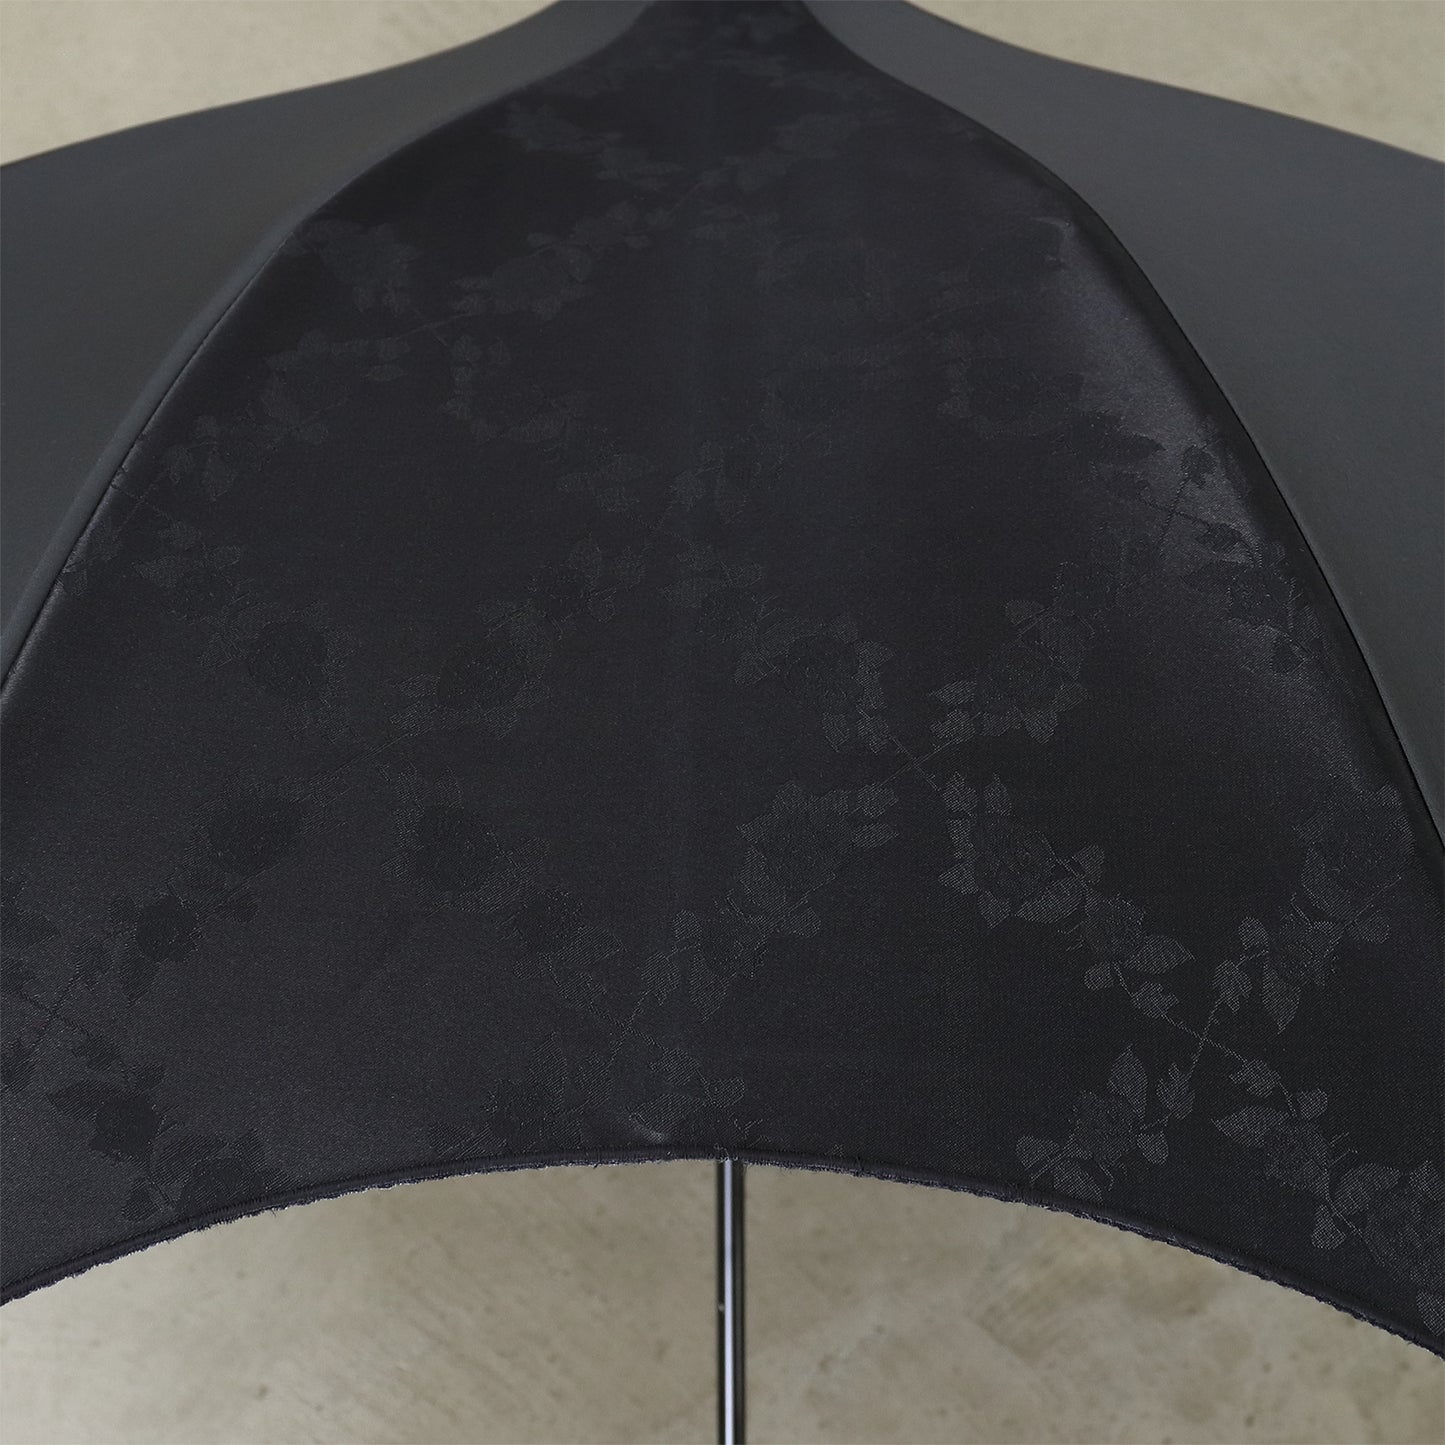 【New】Artiswitch るるアンブレラ 魔法衣装ver. - パゴダ 傘 遮光 晴雨兼用 UVカット ゴシック